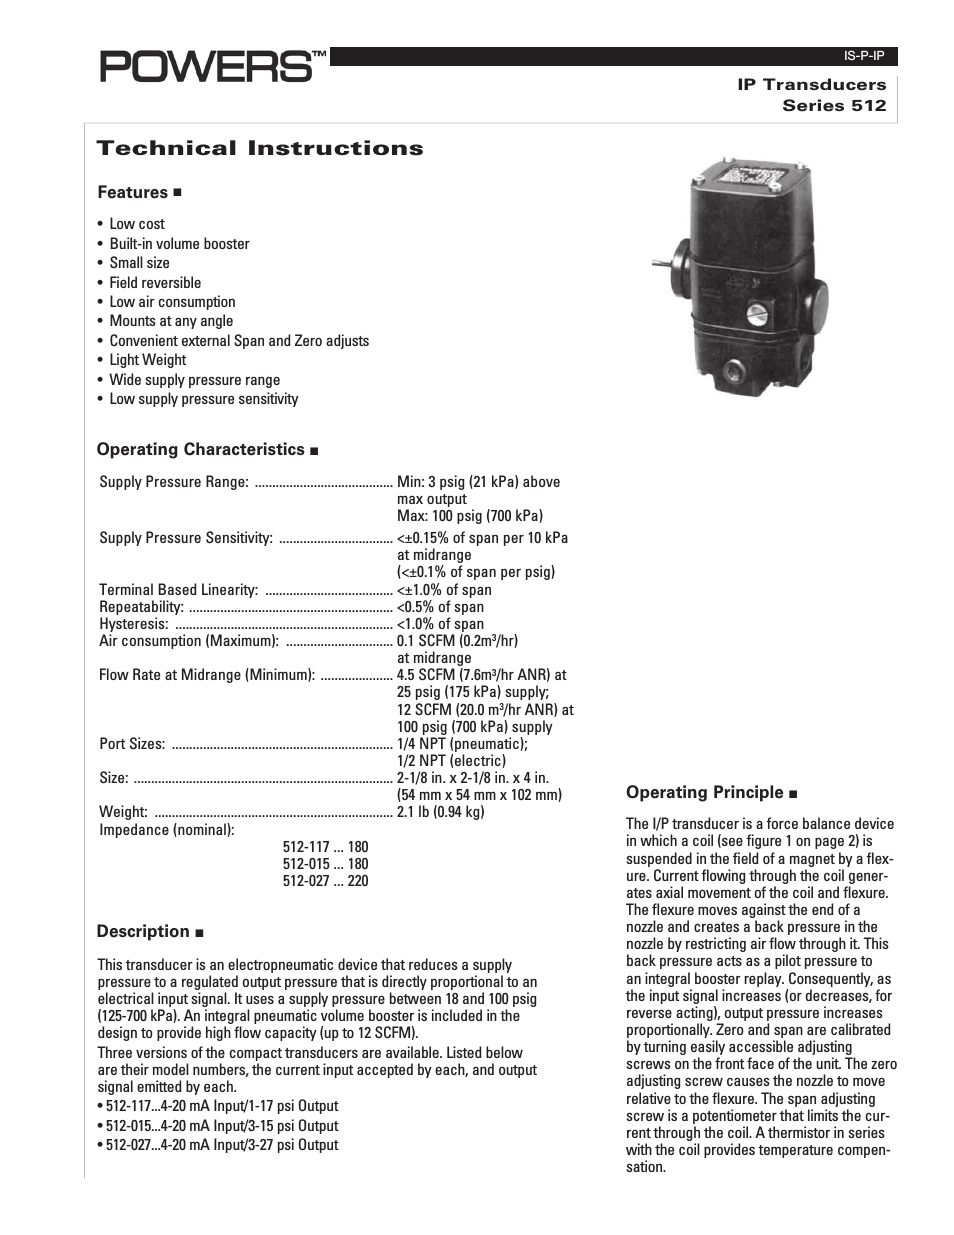 900X I/P Flowrite II Pressure Regulators